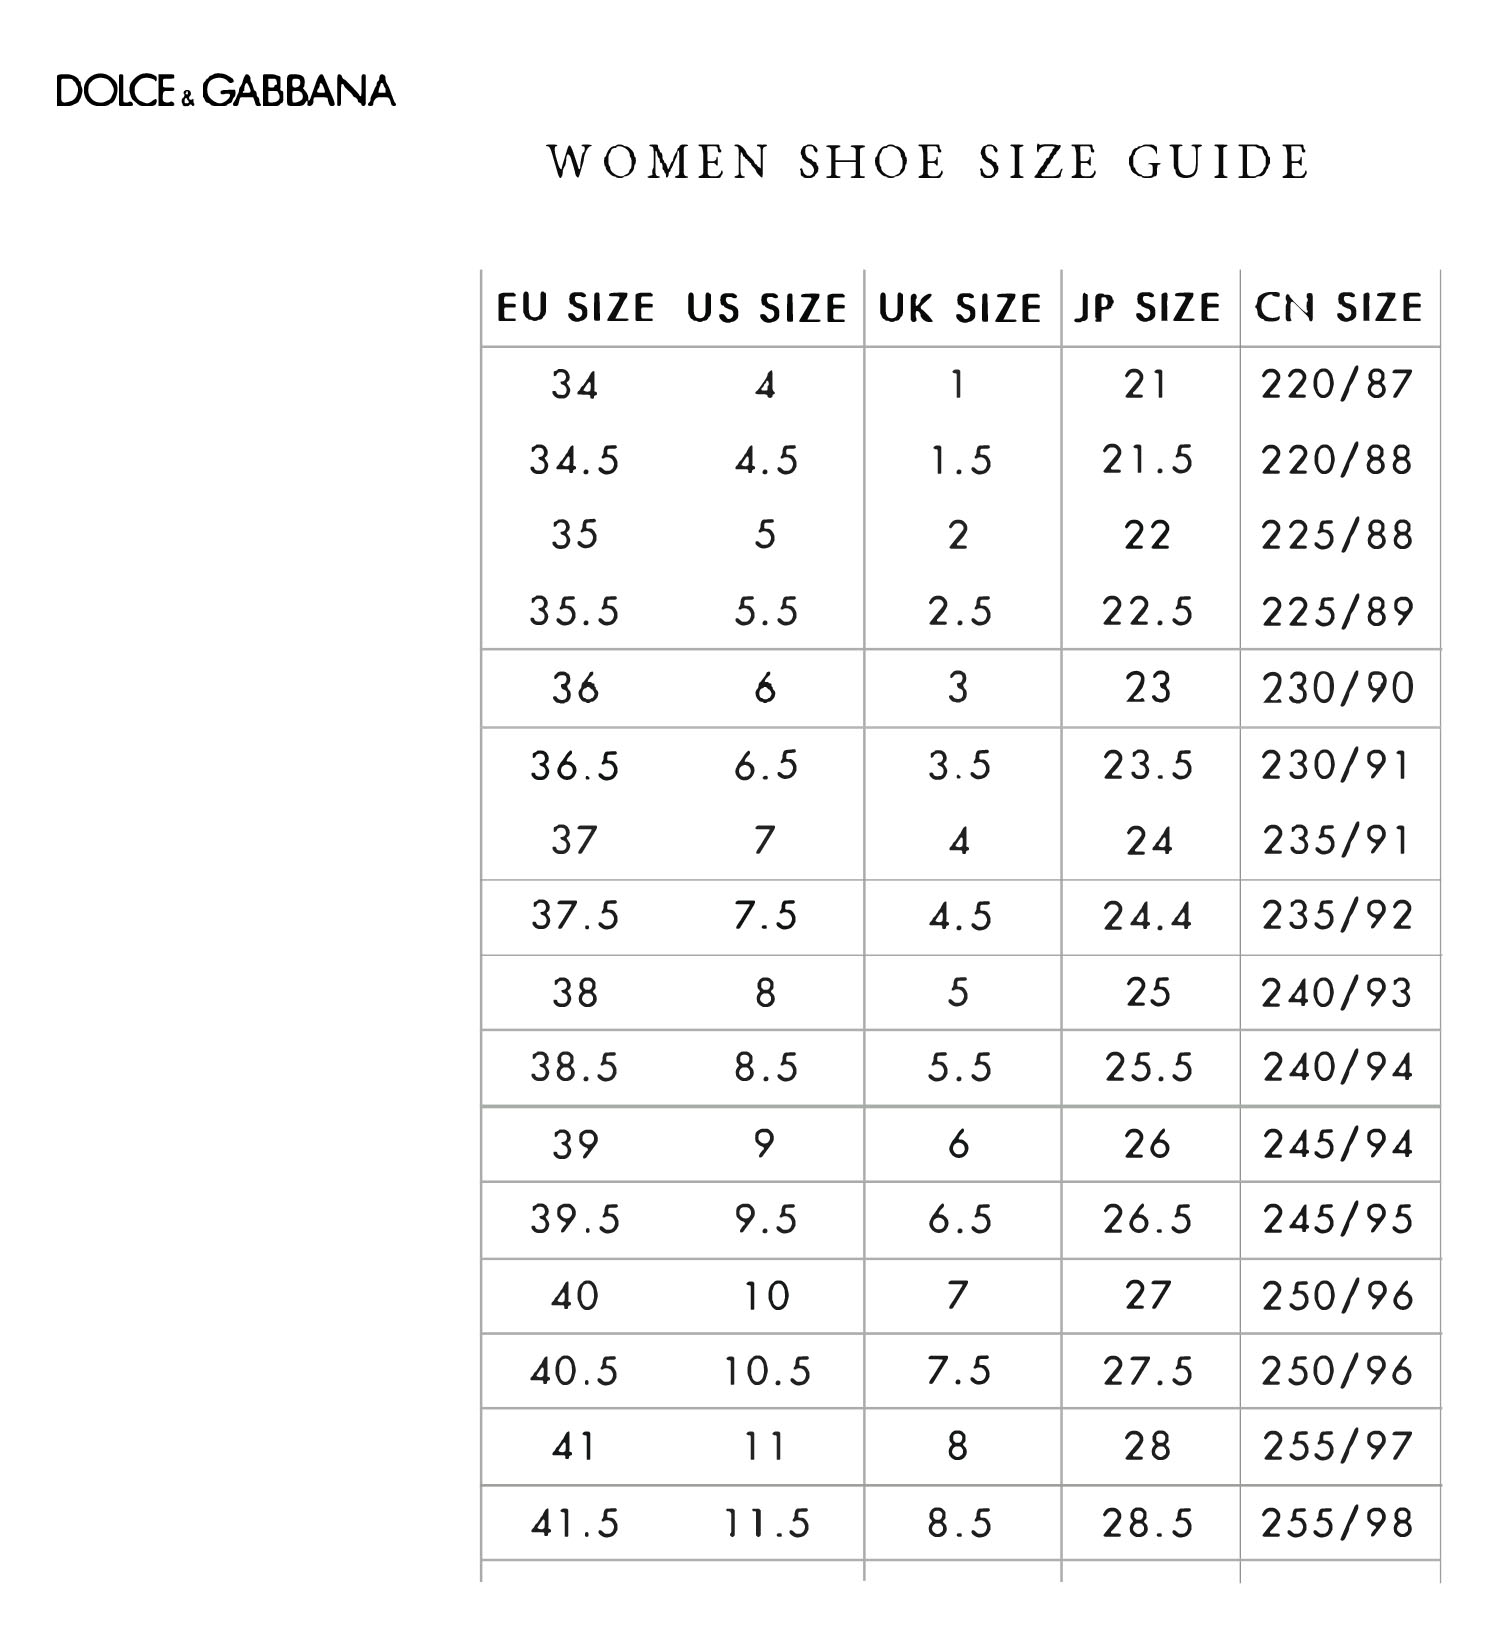 Arriba 39+ imagen dolce gabbana mens shoes size chart - Abzlocal.mx